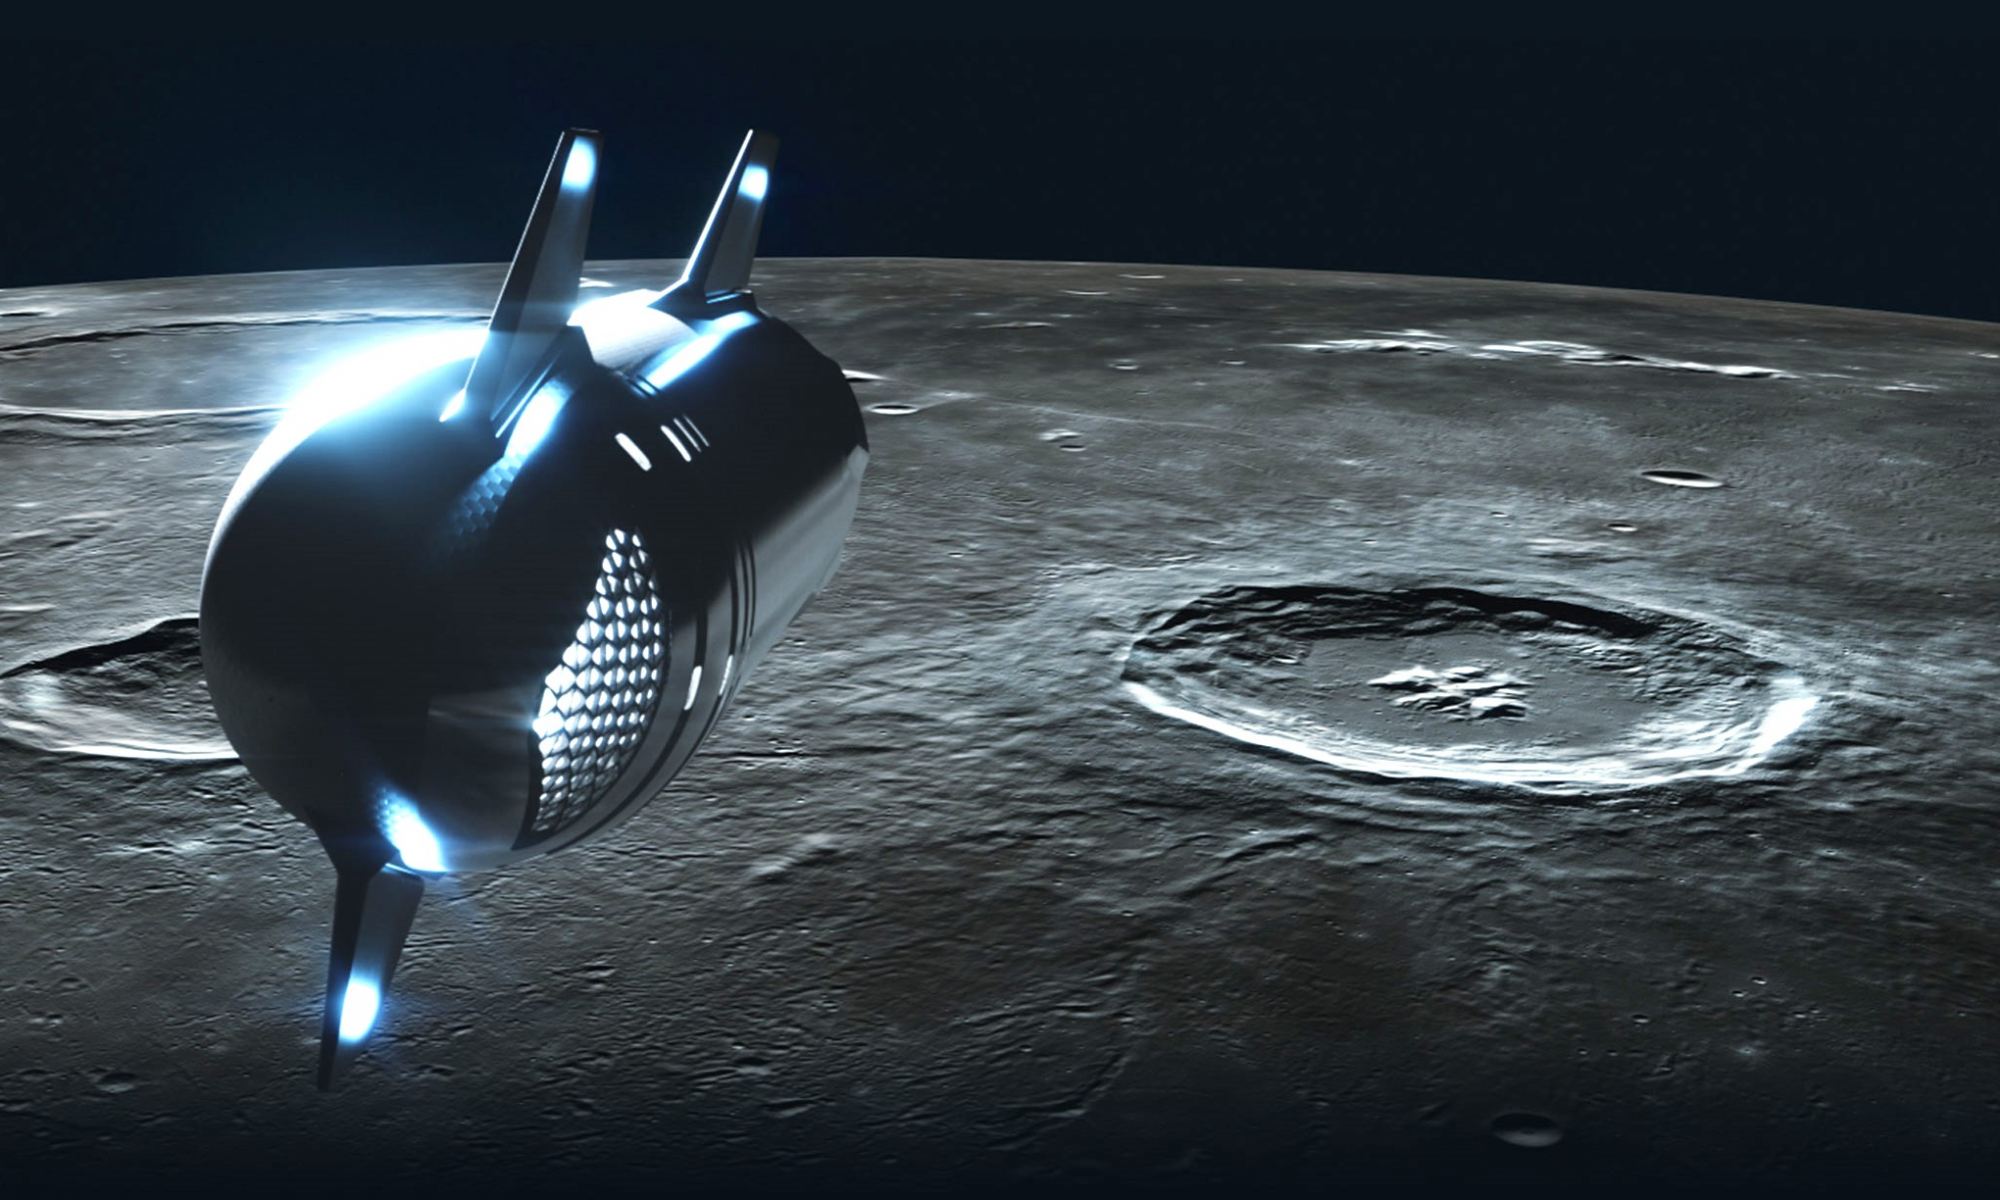 Illustration: Starship flying over the moon